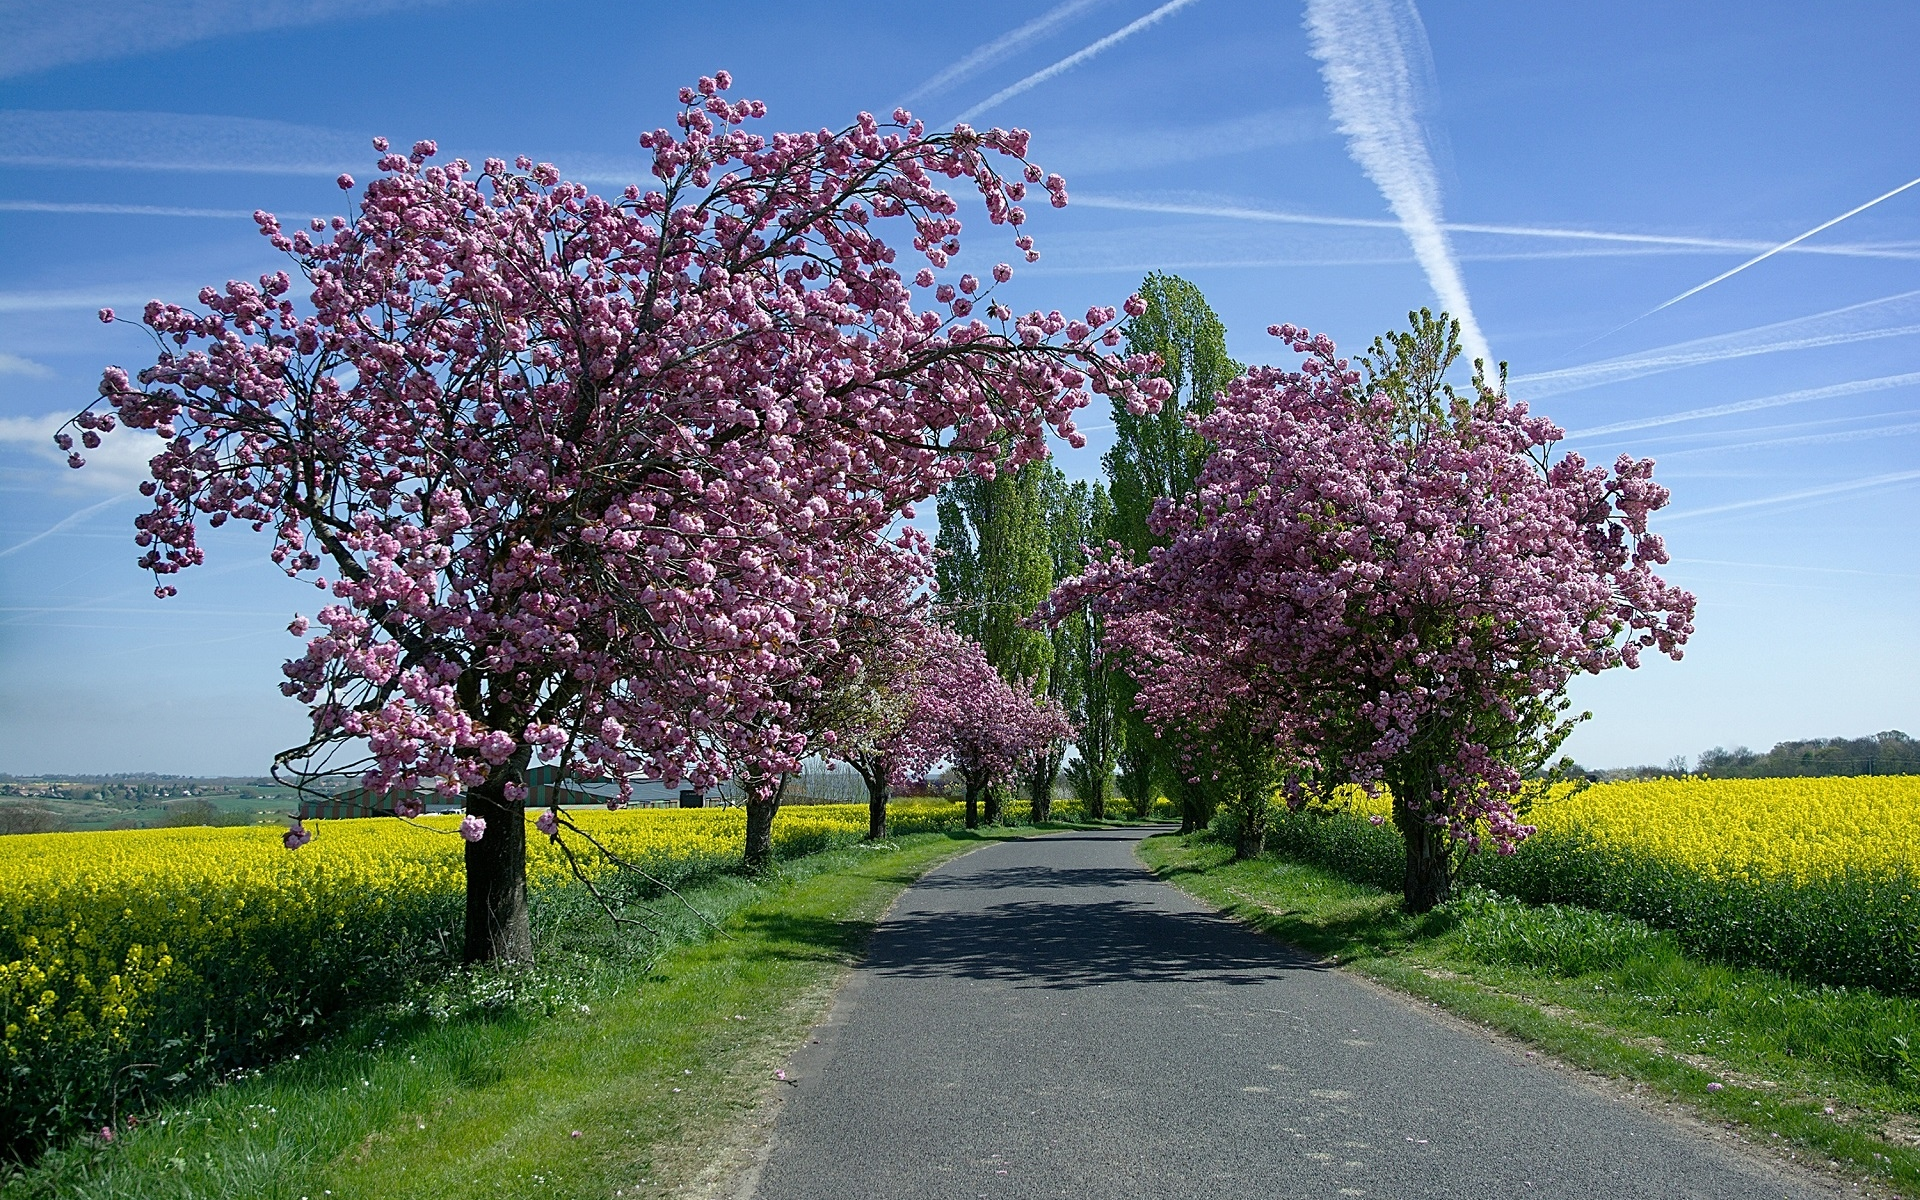 поля, деревья, небо, дорога, рапс, цветение, весна, солнце